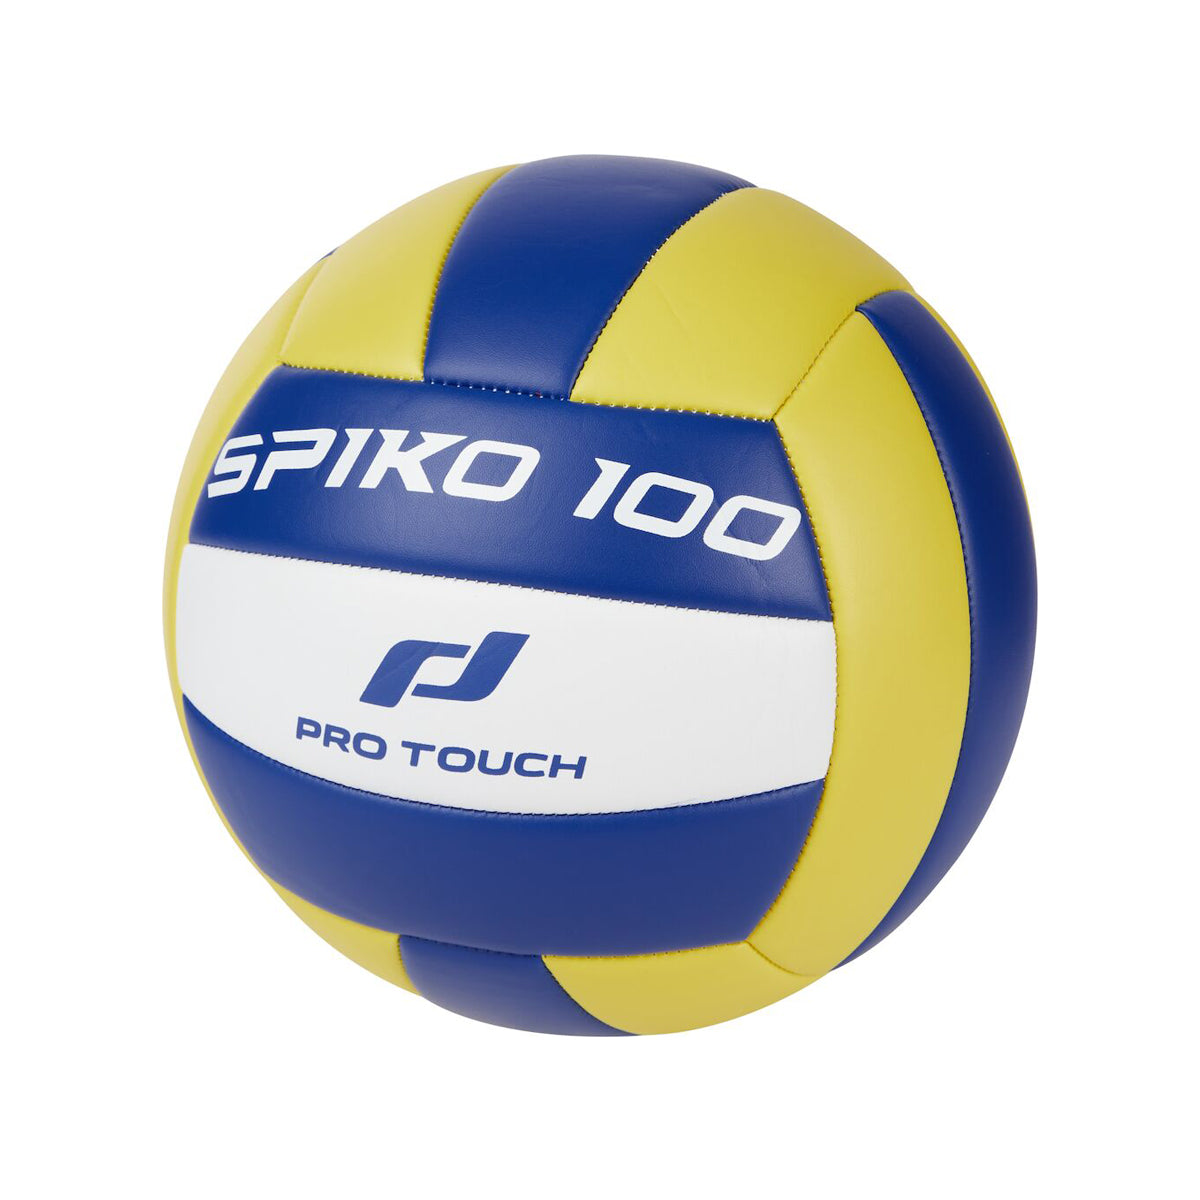 Spiko 100 Volley Ball